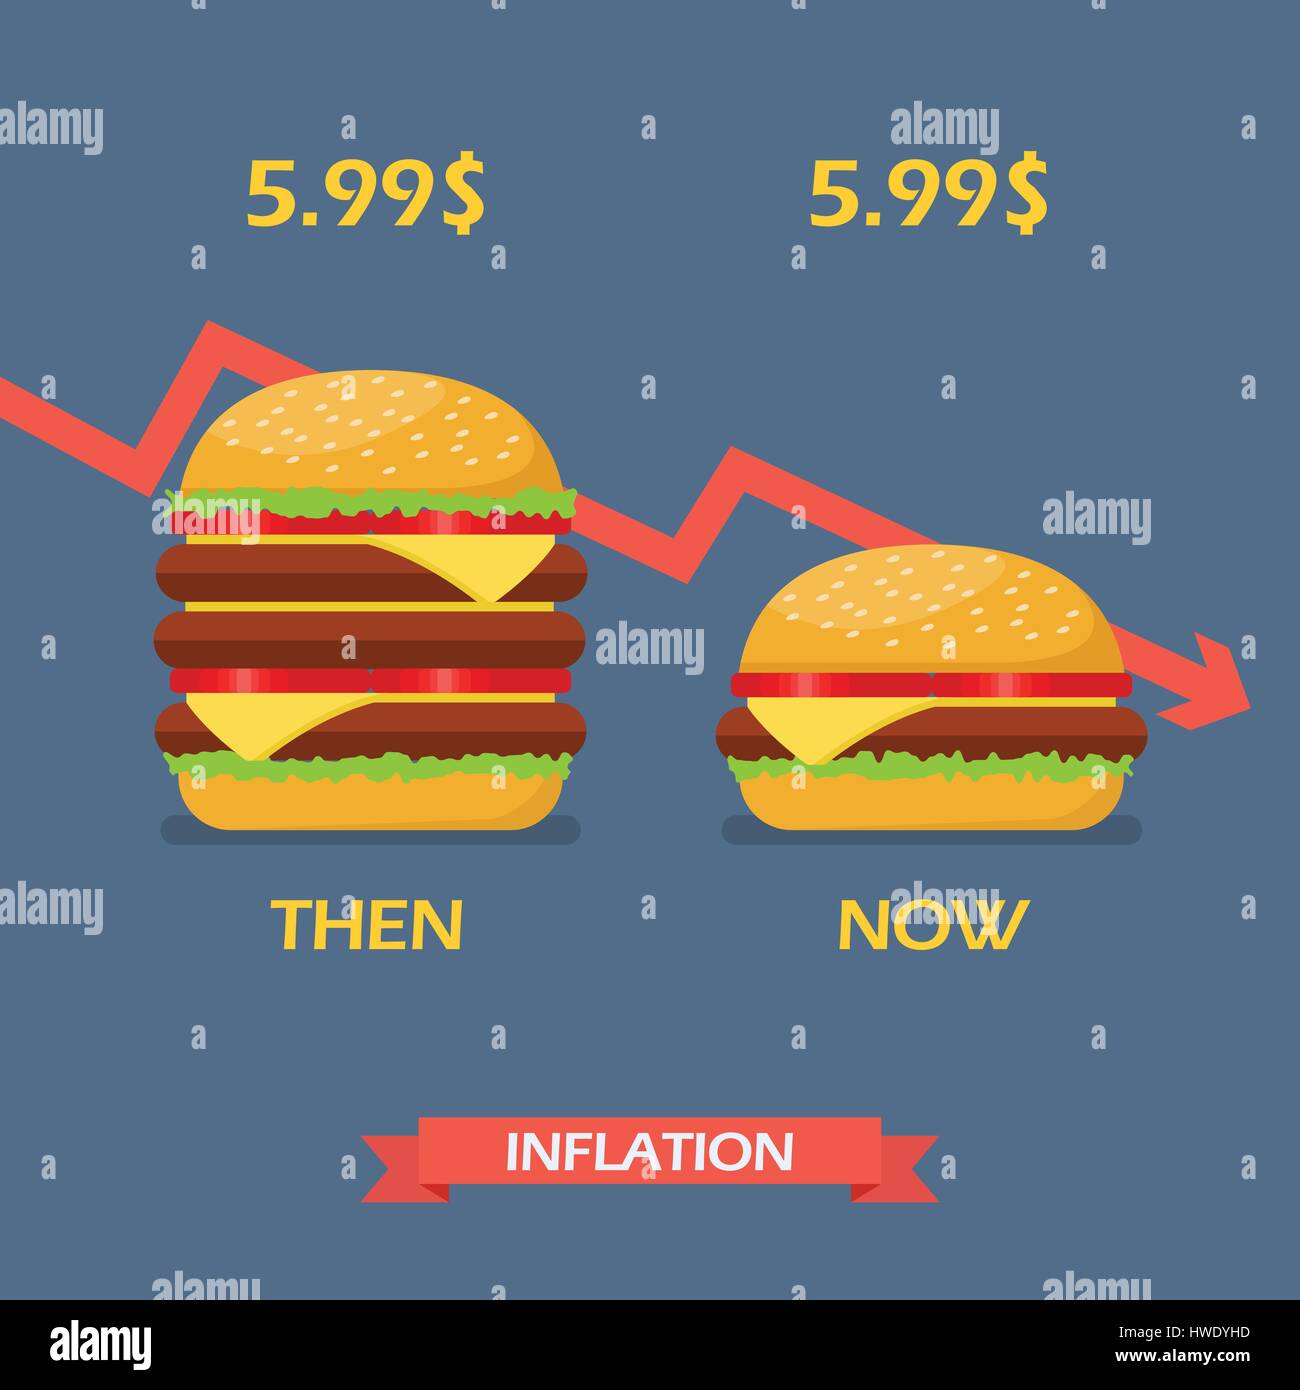 Inflation concept of hamburger. Vector illustration Stock Vector